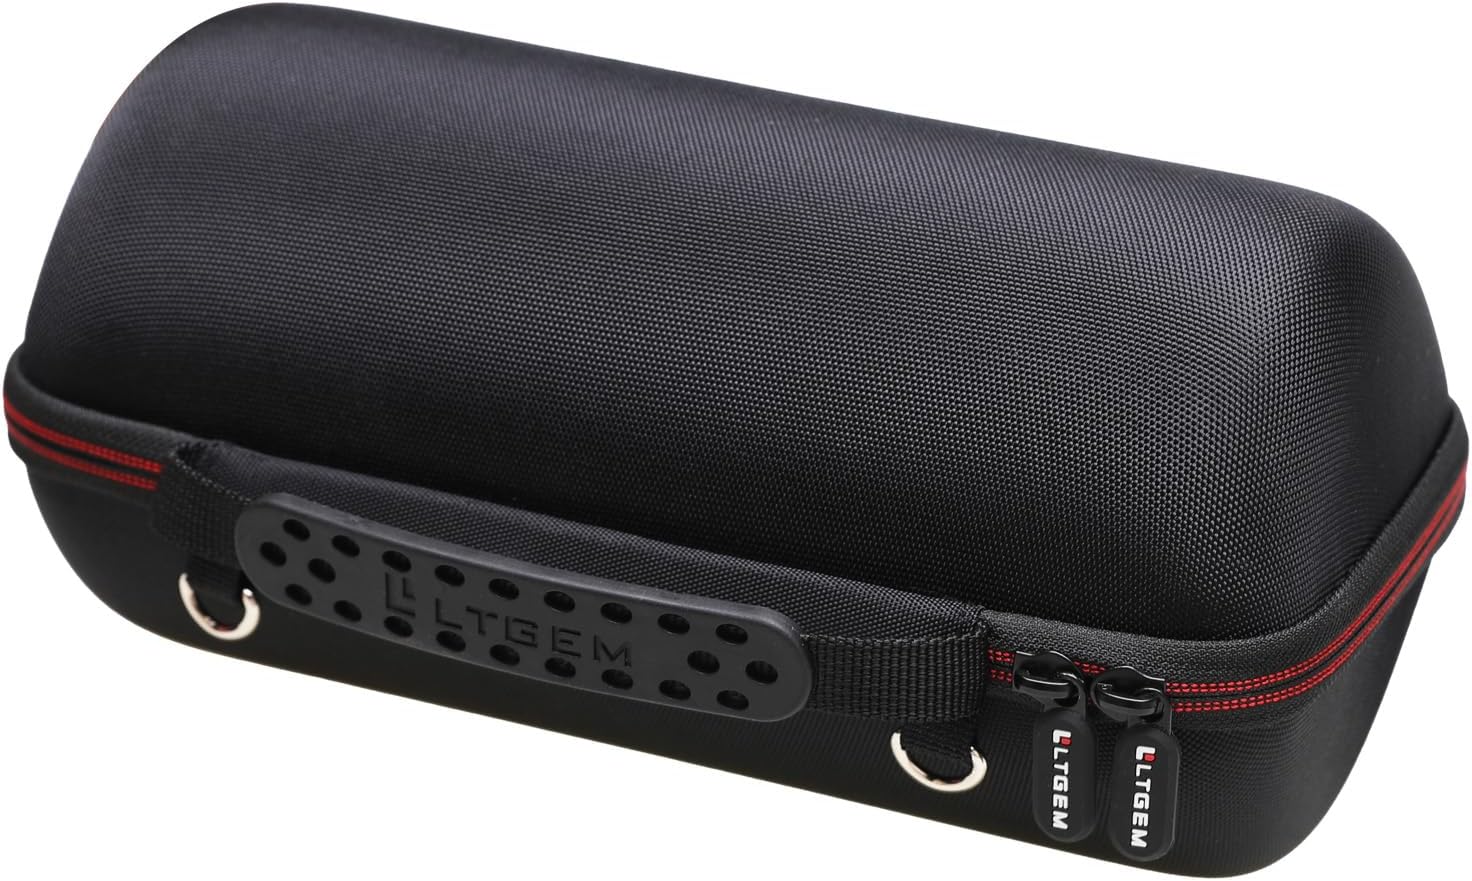 LTGEM EVA Hard Case for Fifine XLR/USB Dynamic Microphone – Travel Protective Carrying Storage Bag